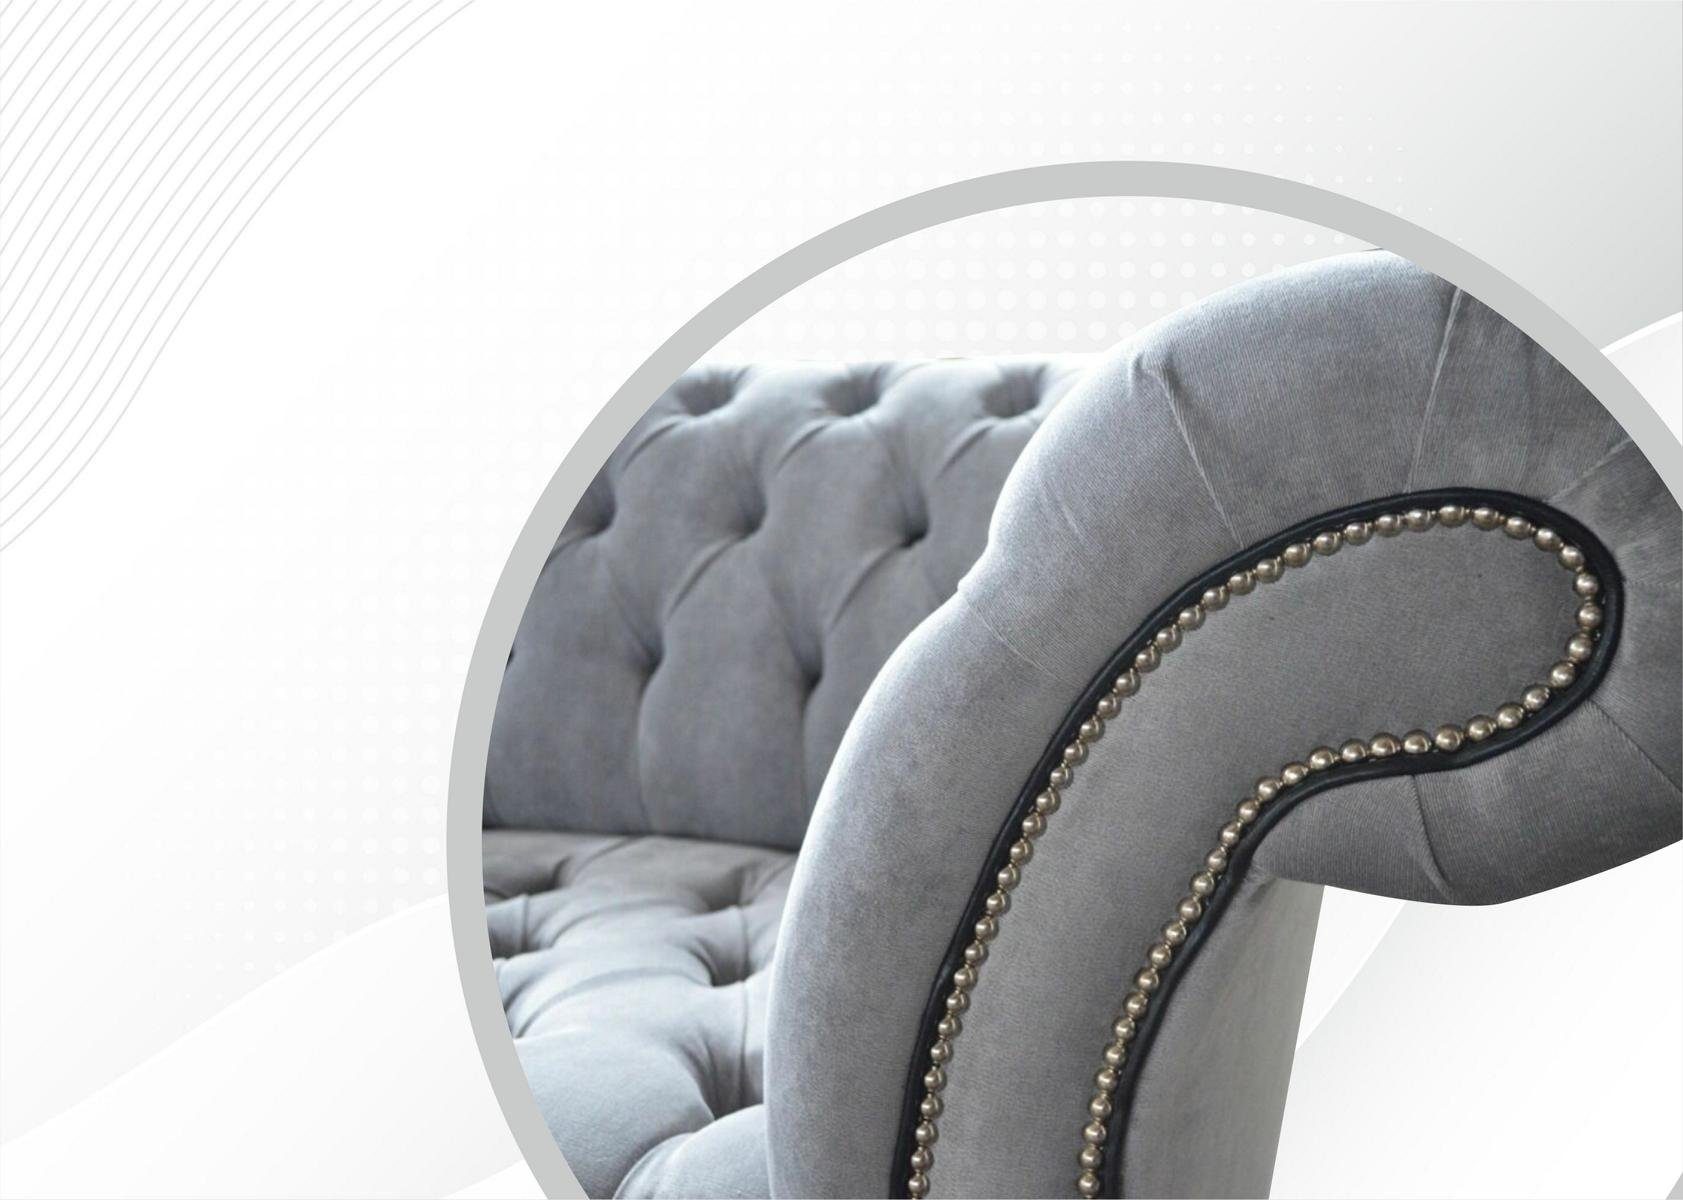 Chesterfield Design Couch 3-Sitzer, Sofa 3 225 Sofa cm JVmoebel Sitzer